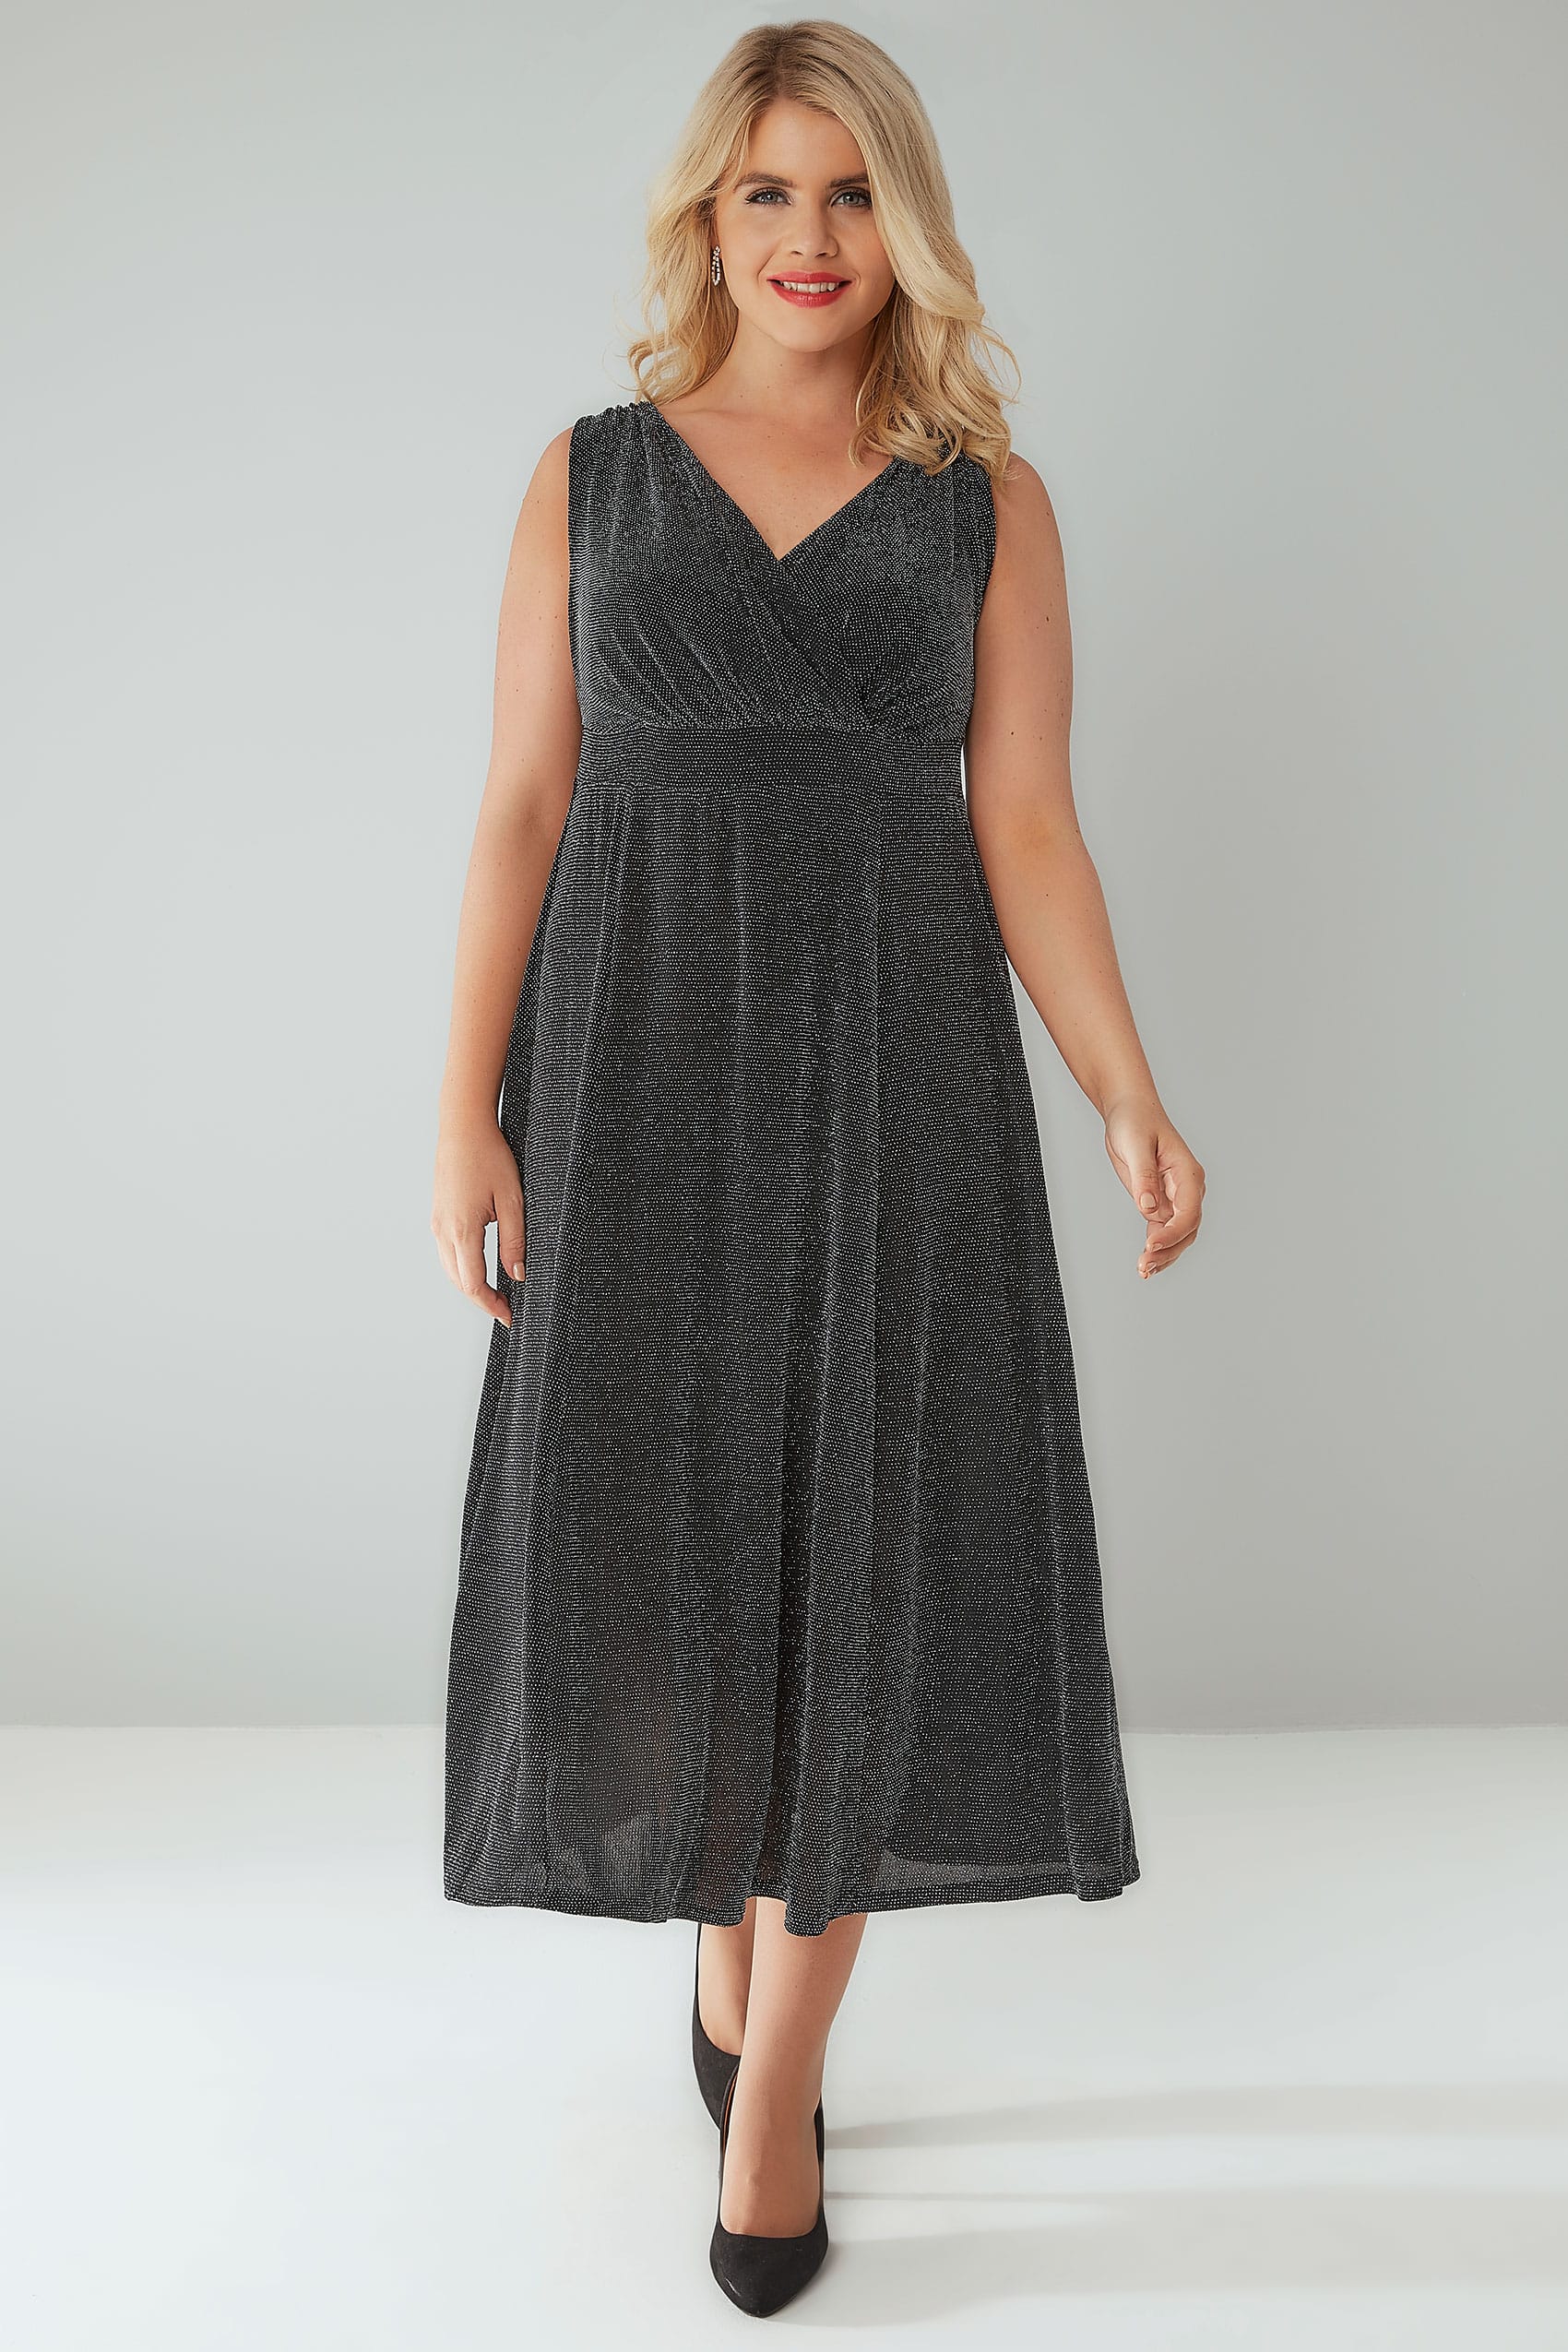 Black & Silver Sparkle Wrap Front Sleevelss Midi Dress Plus Size 14 to 36